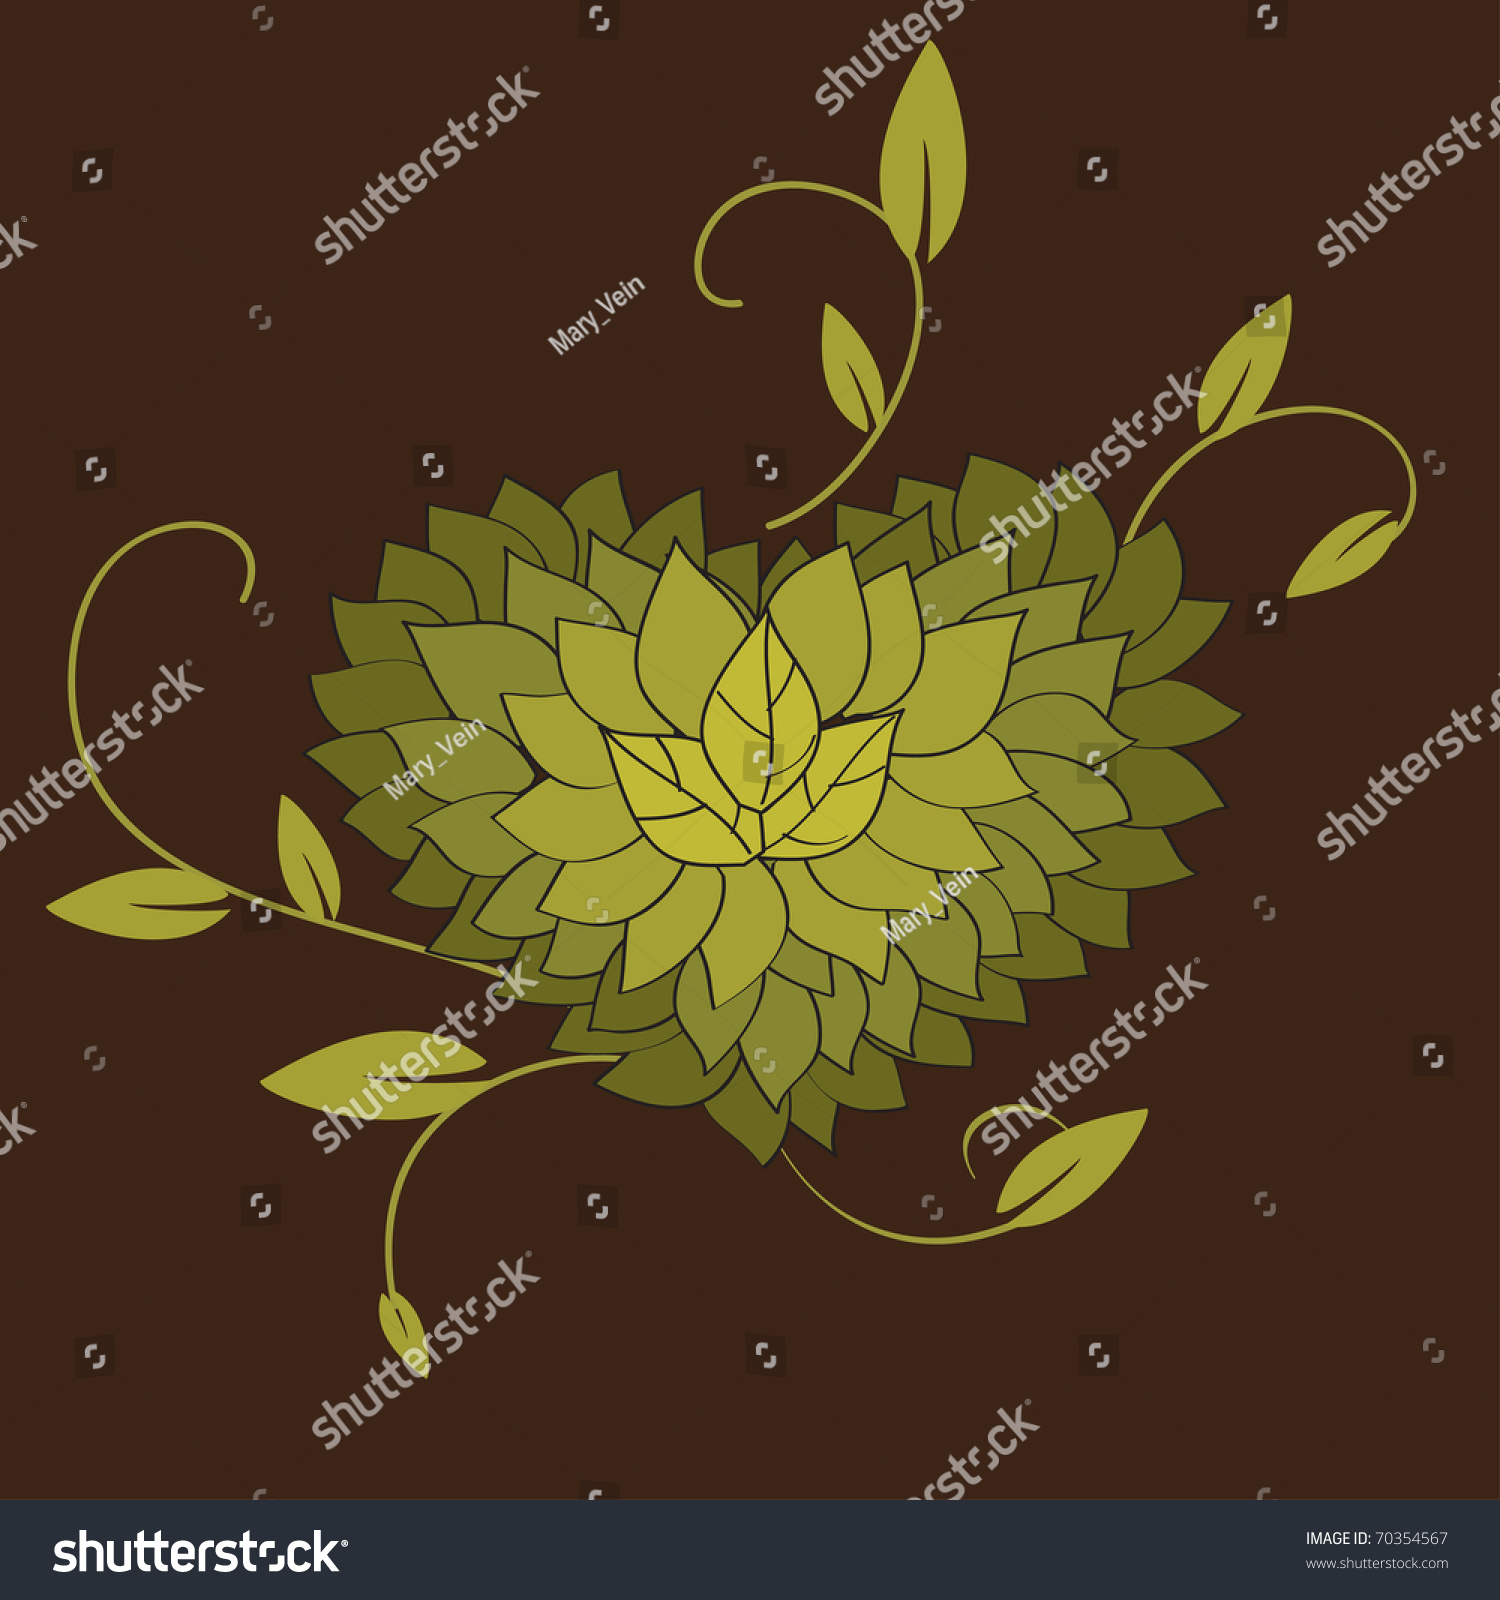 Floral Heart Stock Vector 70354567 : Shutterstock